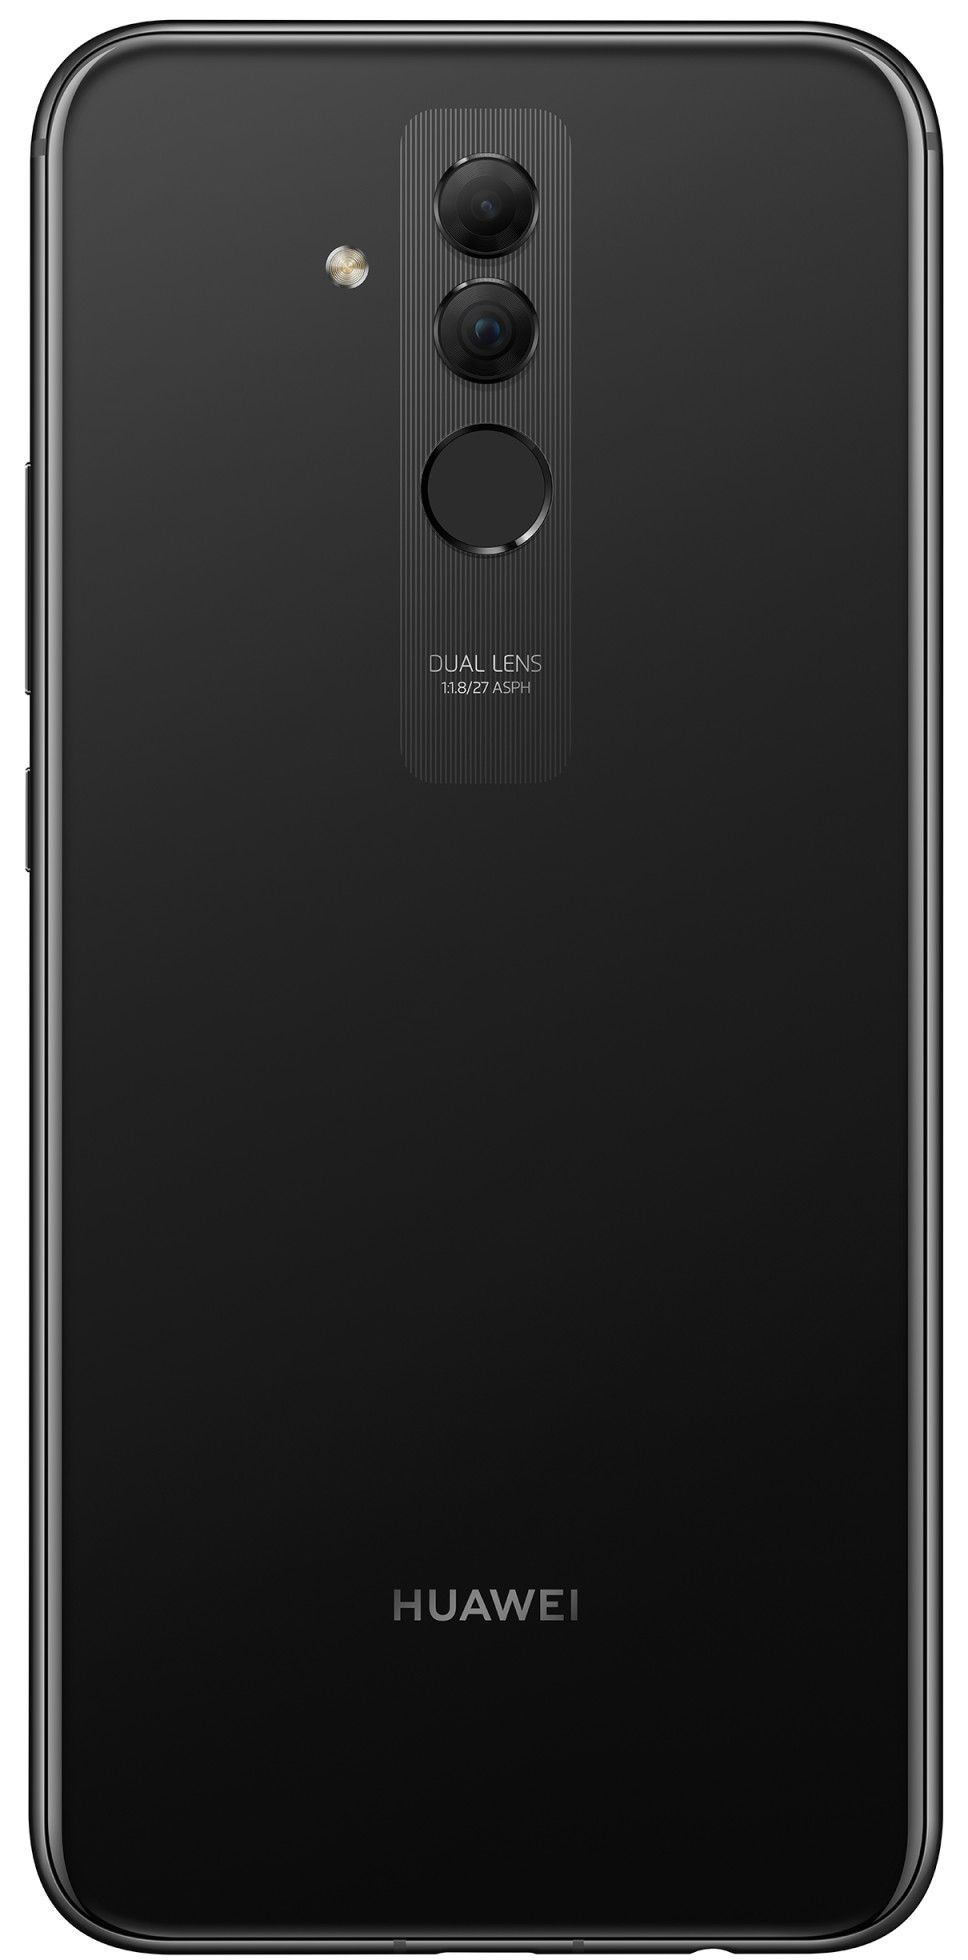 Хуавей про 20 мат. Huawei Mate 20 Lite. Huawei Mate 20 Lite 64gb. Huawei Mate 20 Lite Sne-lx1. Смартфон Huawei Mate 20 Lite Black (Sne-lx1).